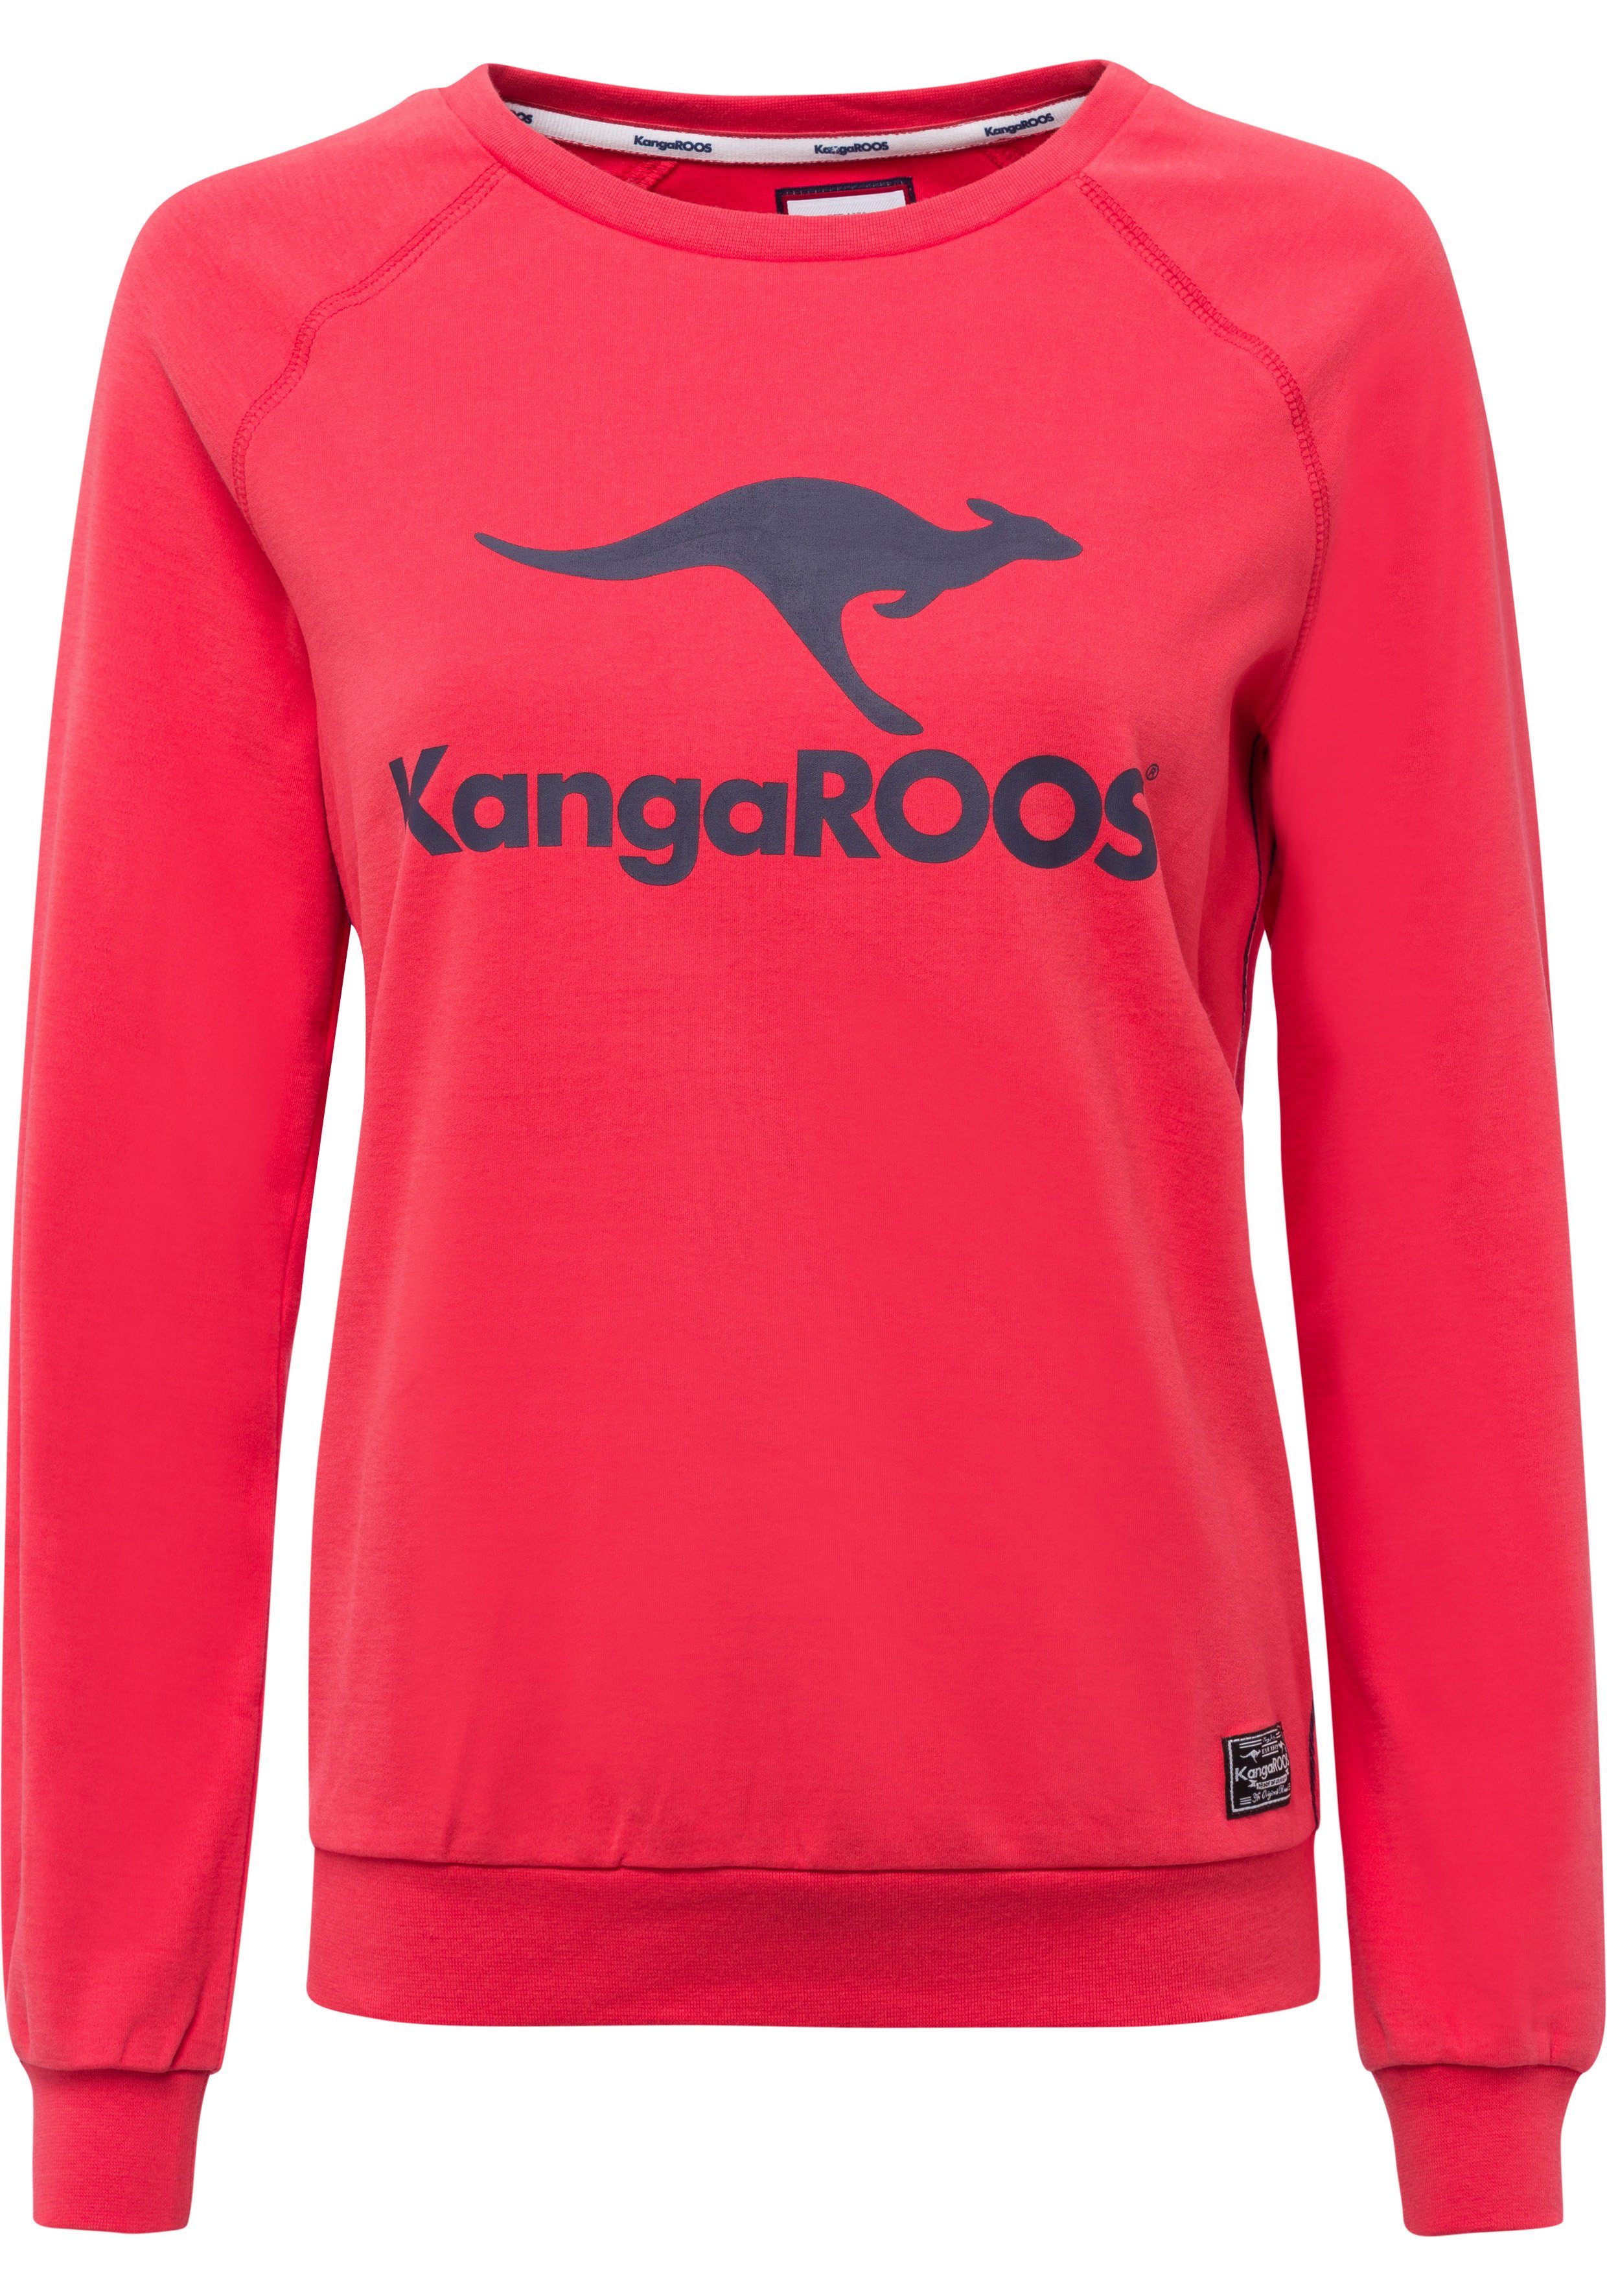 KangaROOS Sweater mit großem orange Label-Print vorne